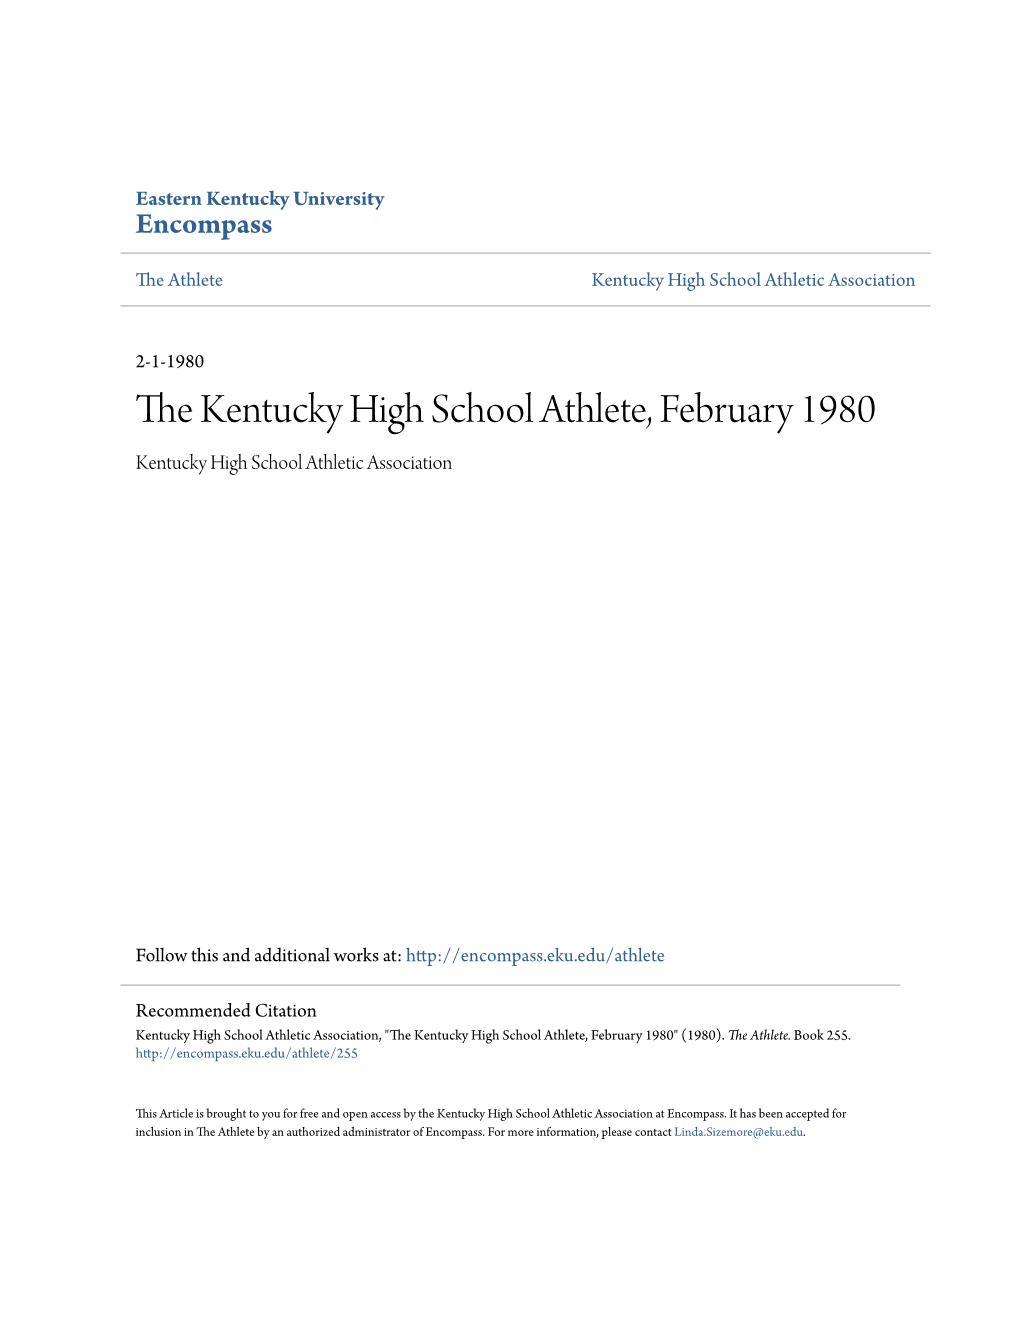 The Kentucky High School Athlete, February 1980 Kentucky High School Athletic Association